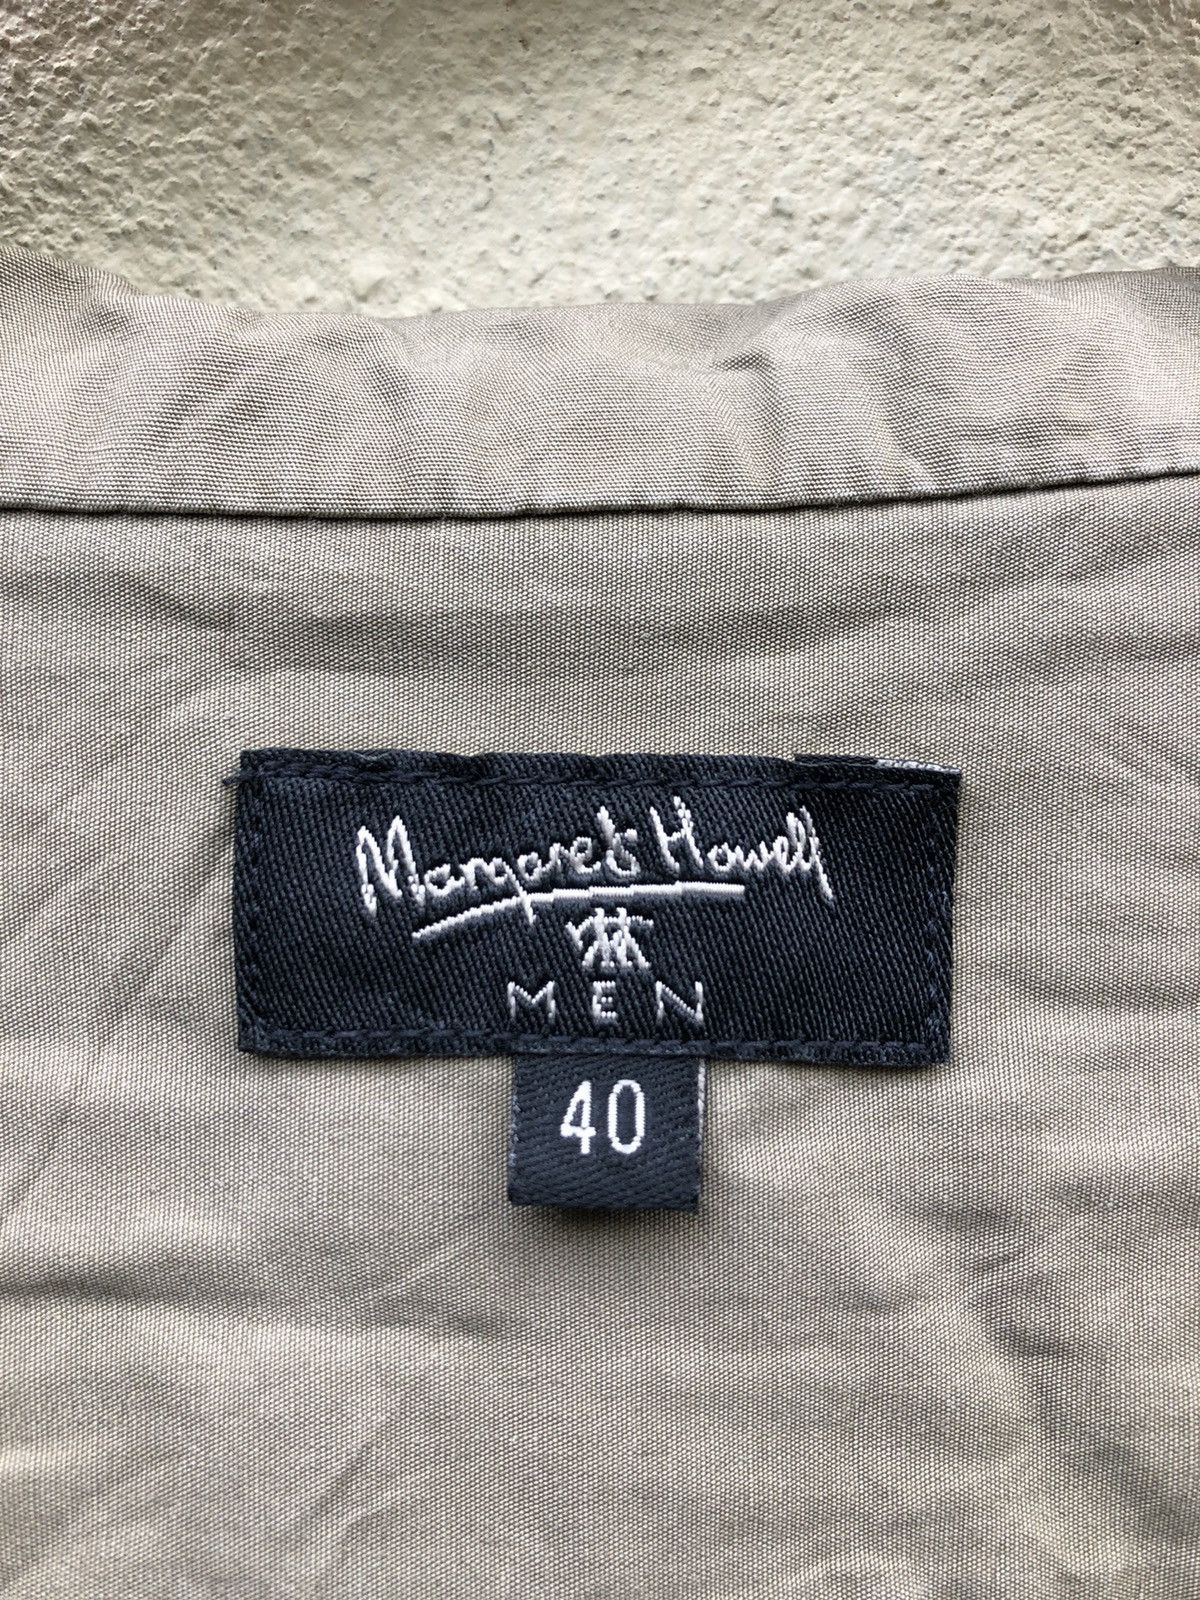 Vintage Mangaret Howell Linen’s Hoodies Jackets Size US L / EU 52-54 / 3 - 6 Thumbnail